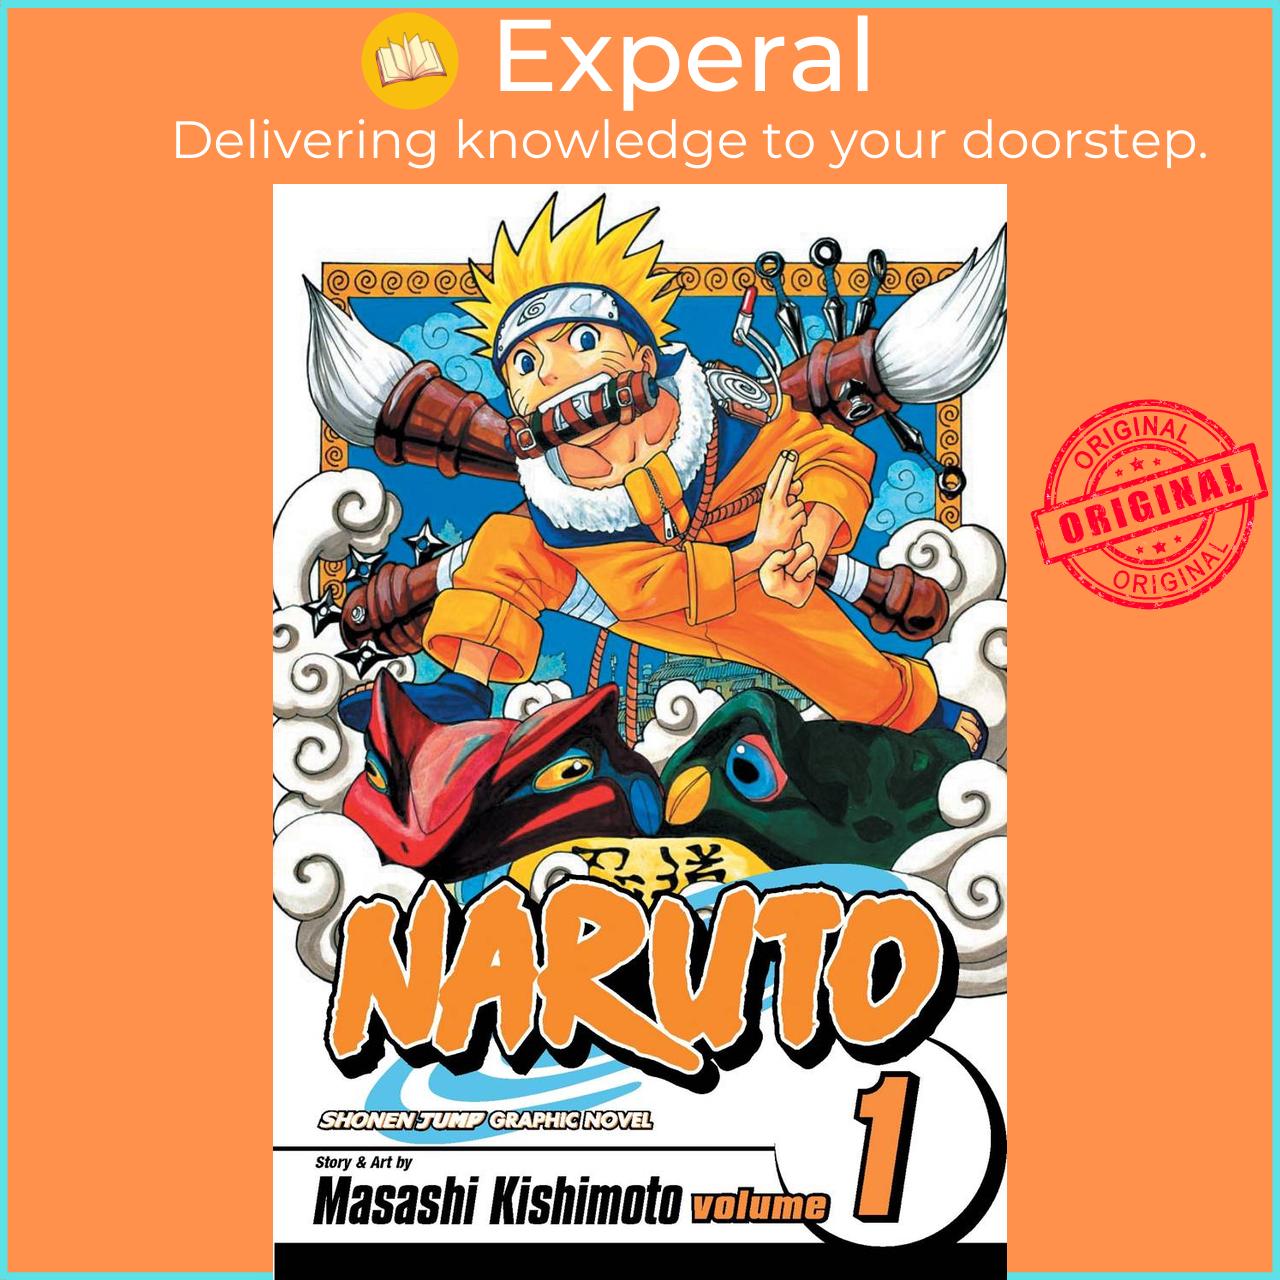 Sách - Naruto, Vol. 1 by Masashi Kishimoto (US edition, paperback)